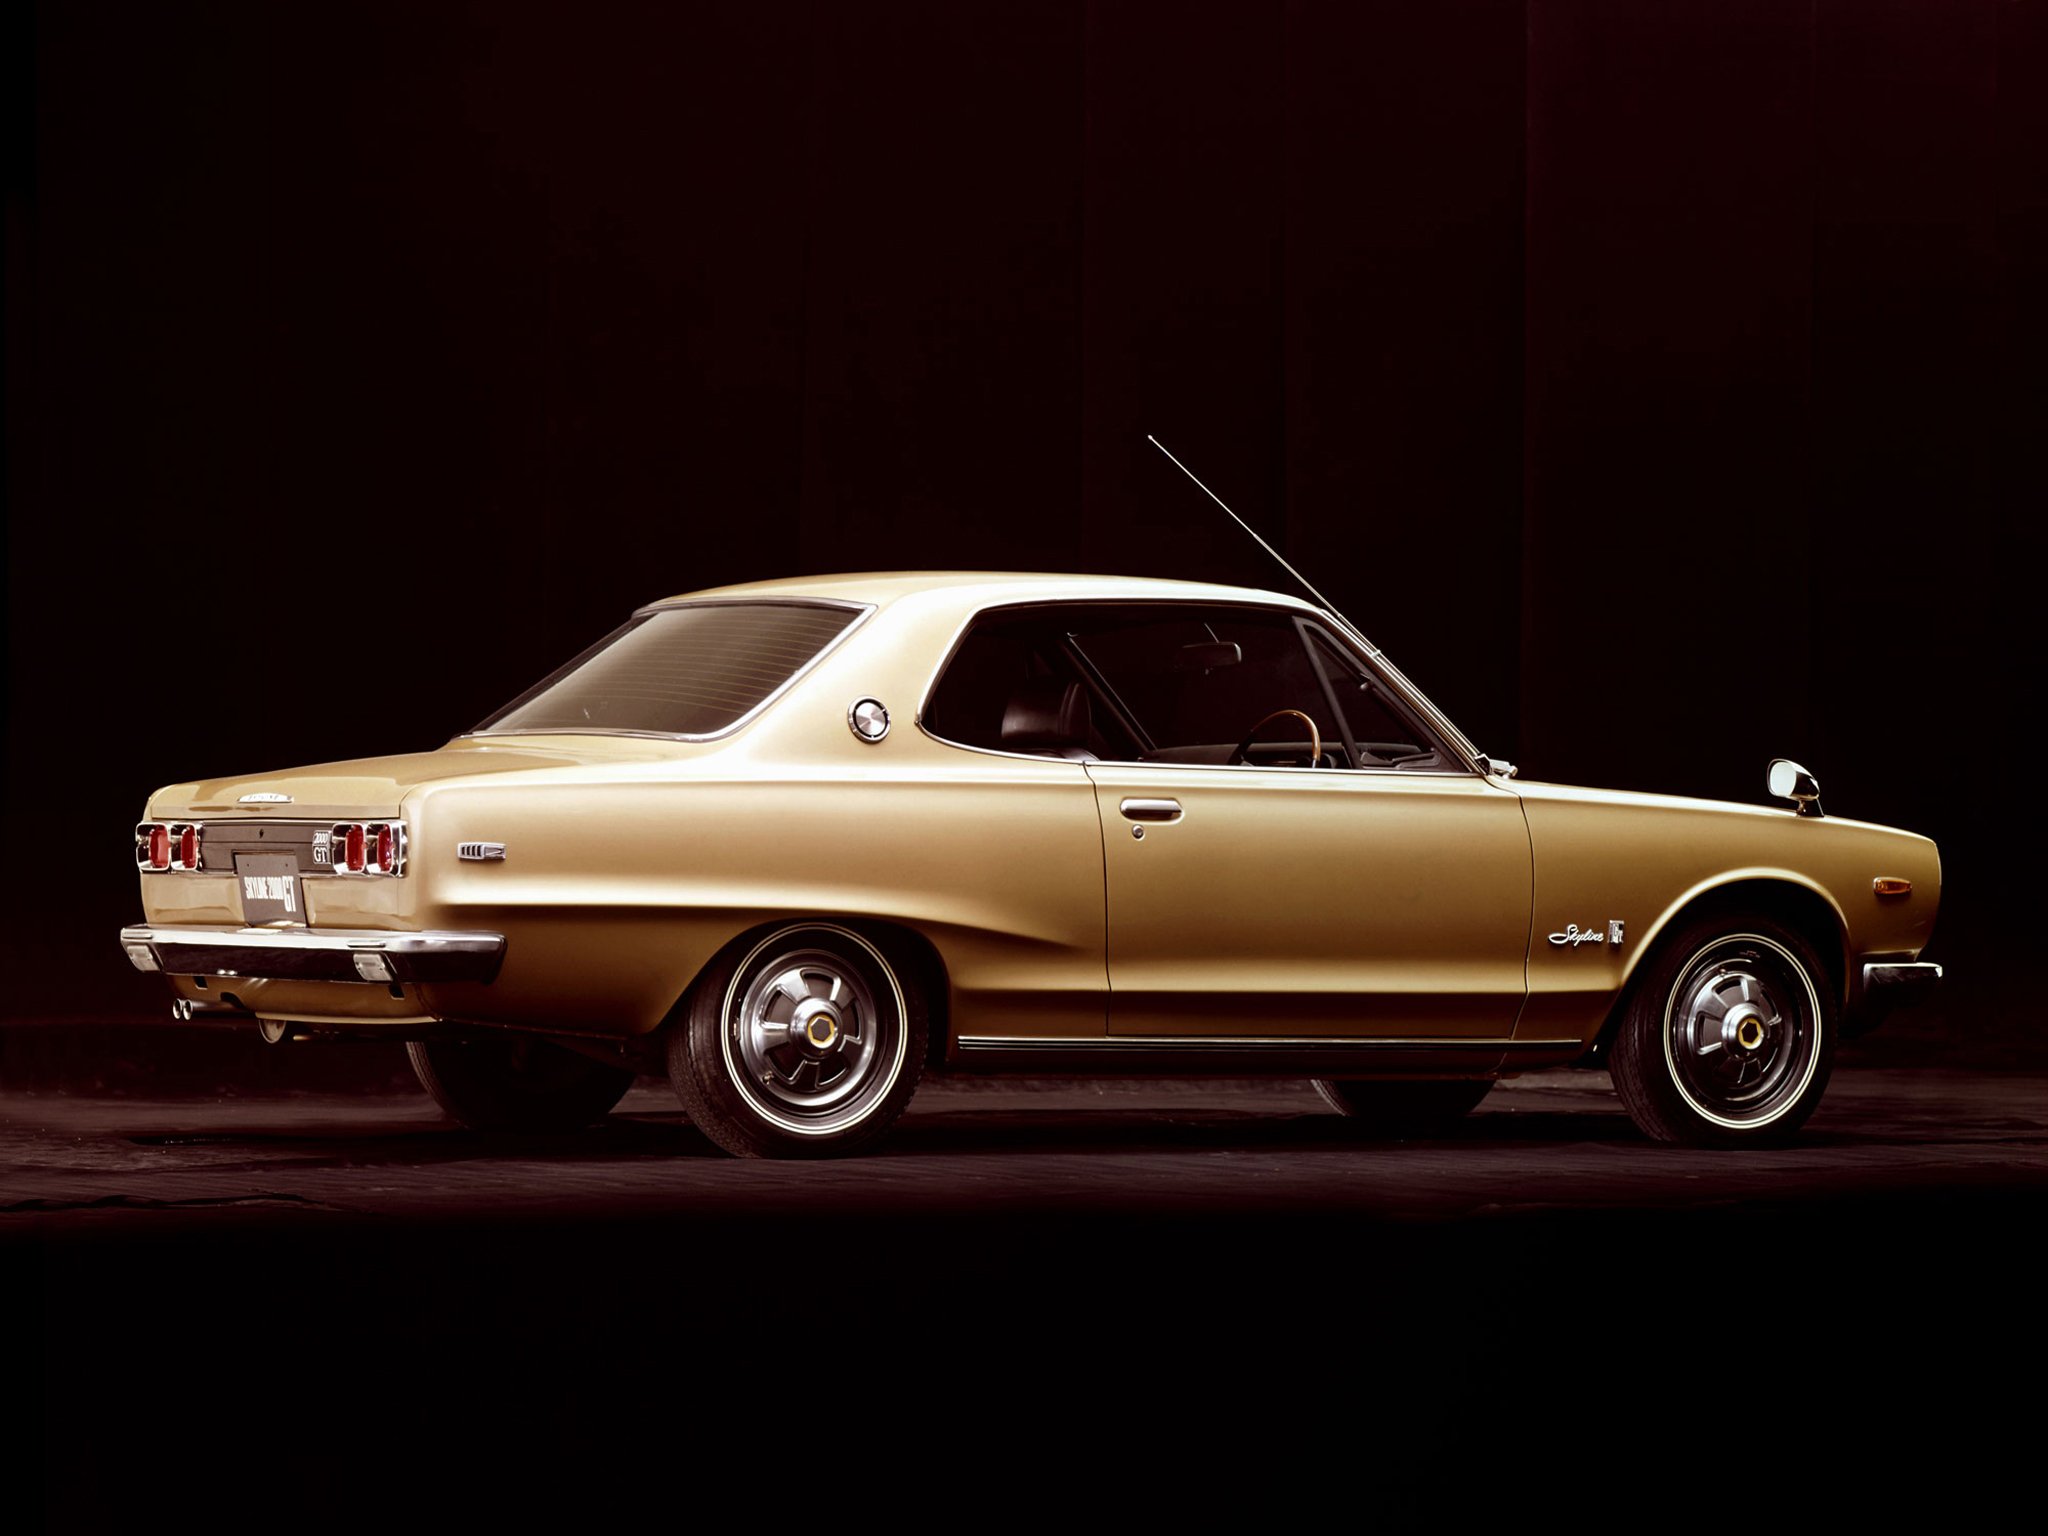 1970 72, Nissan, Skyline, 2000gt, Coupe, Kgc10, G t Wallpaper